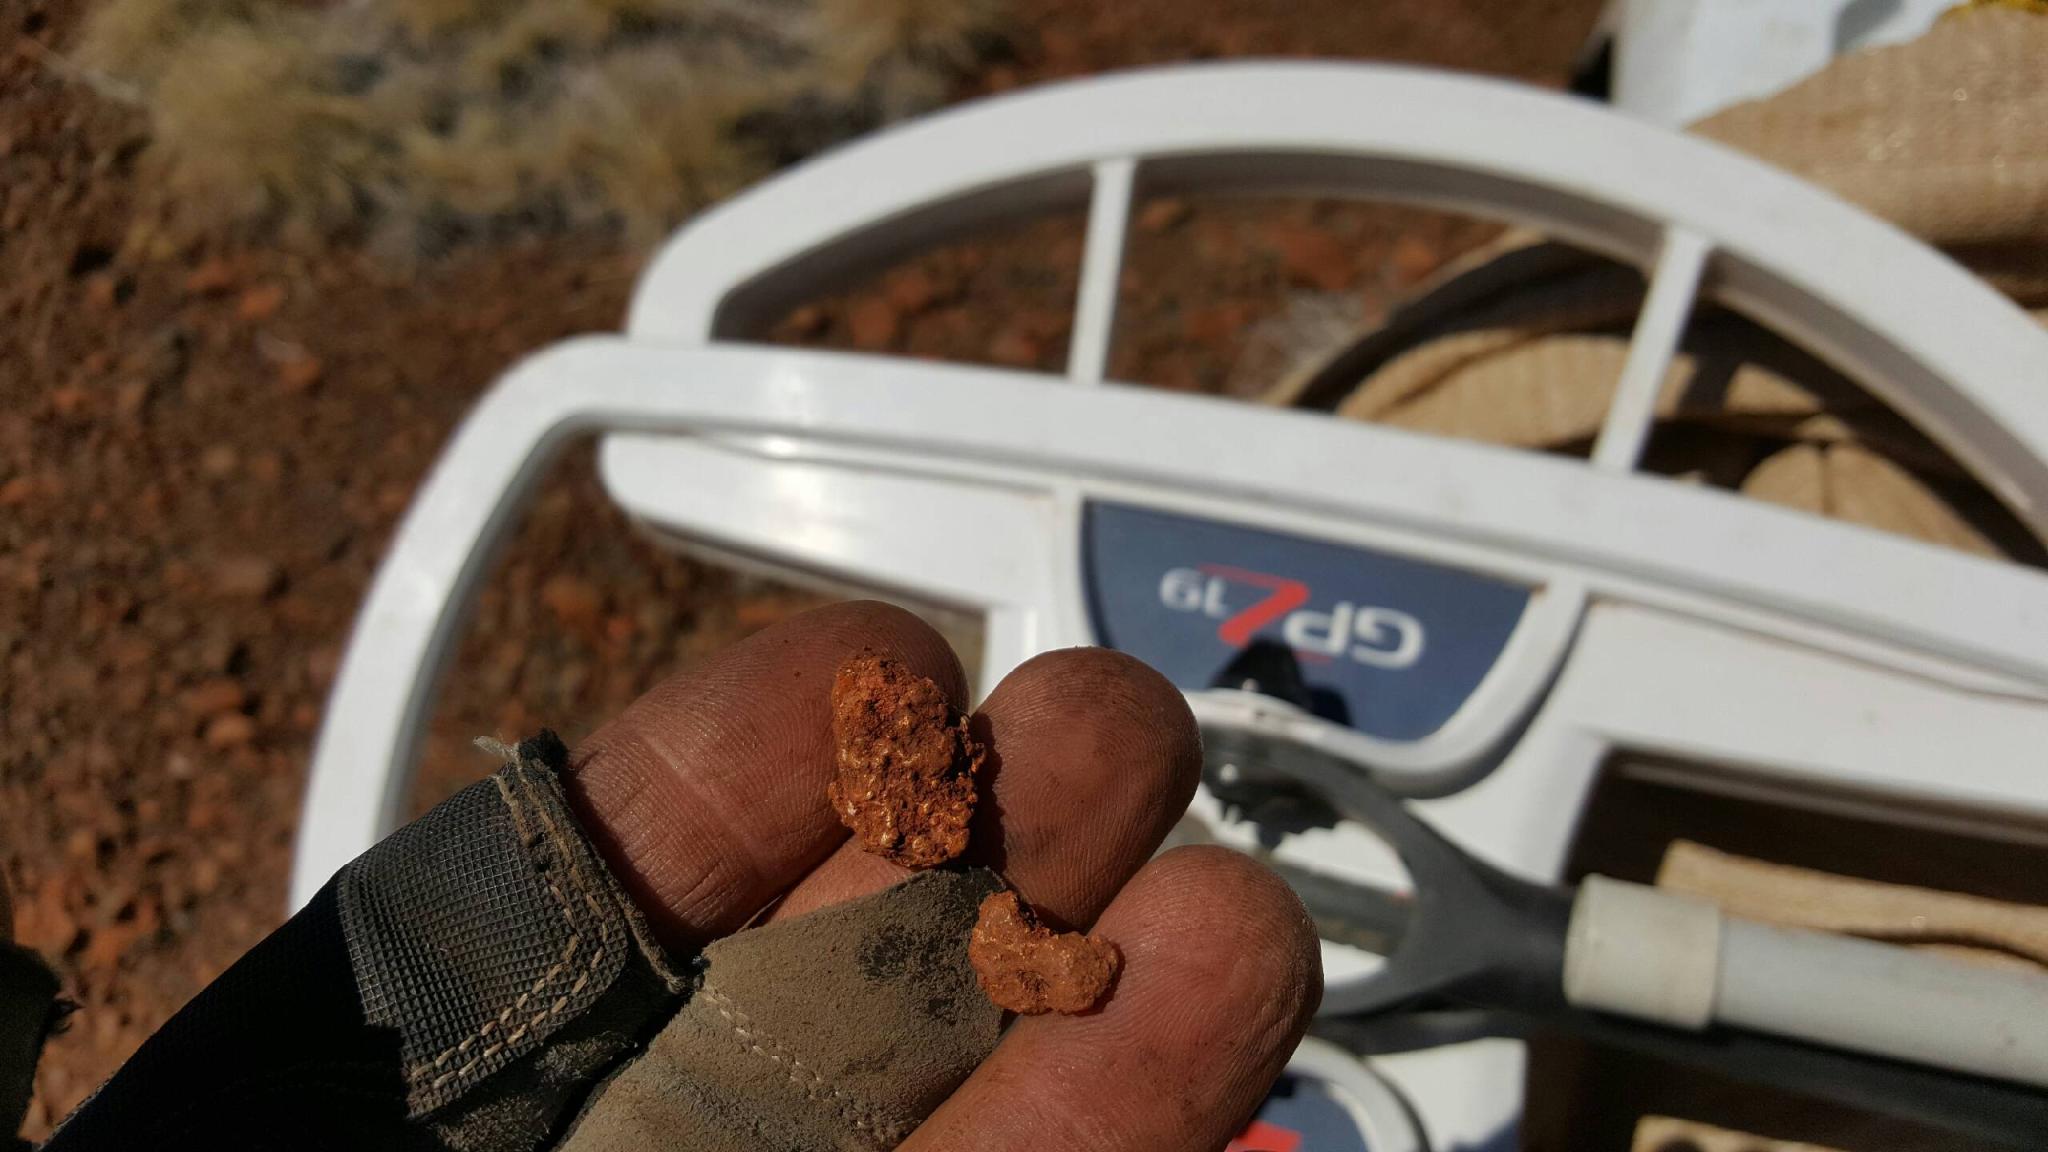 GPZ 19 Coil finds